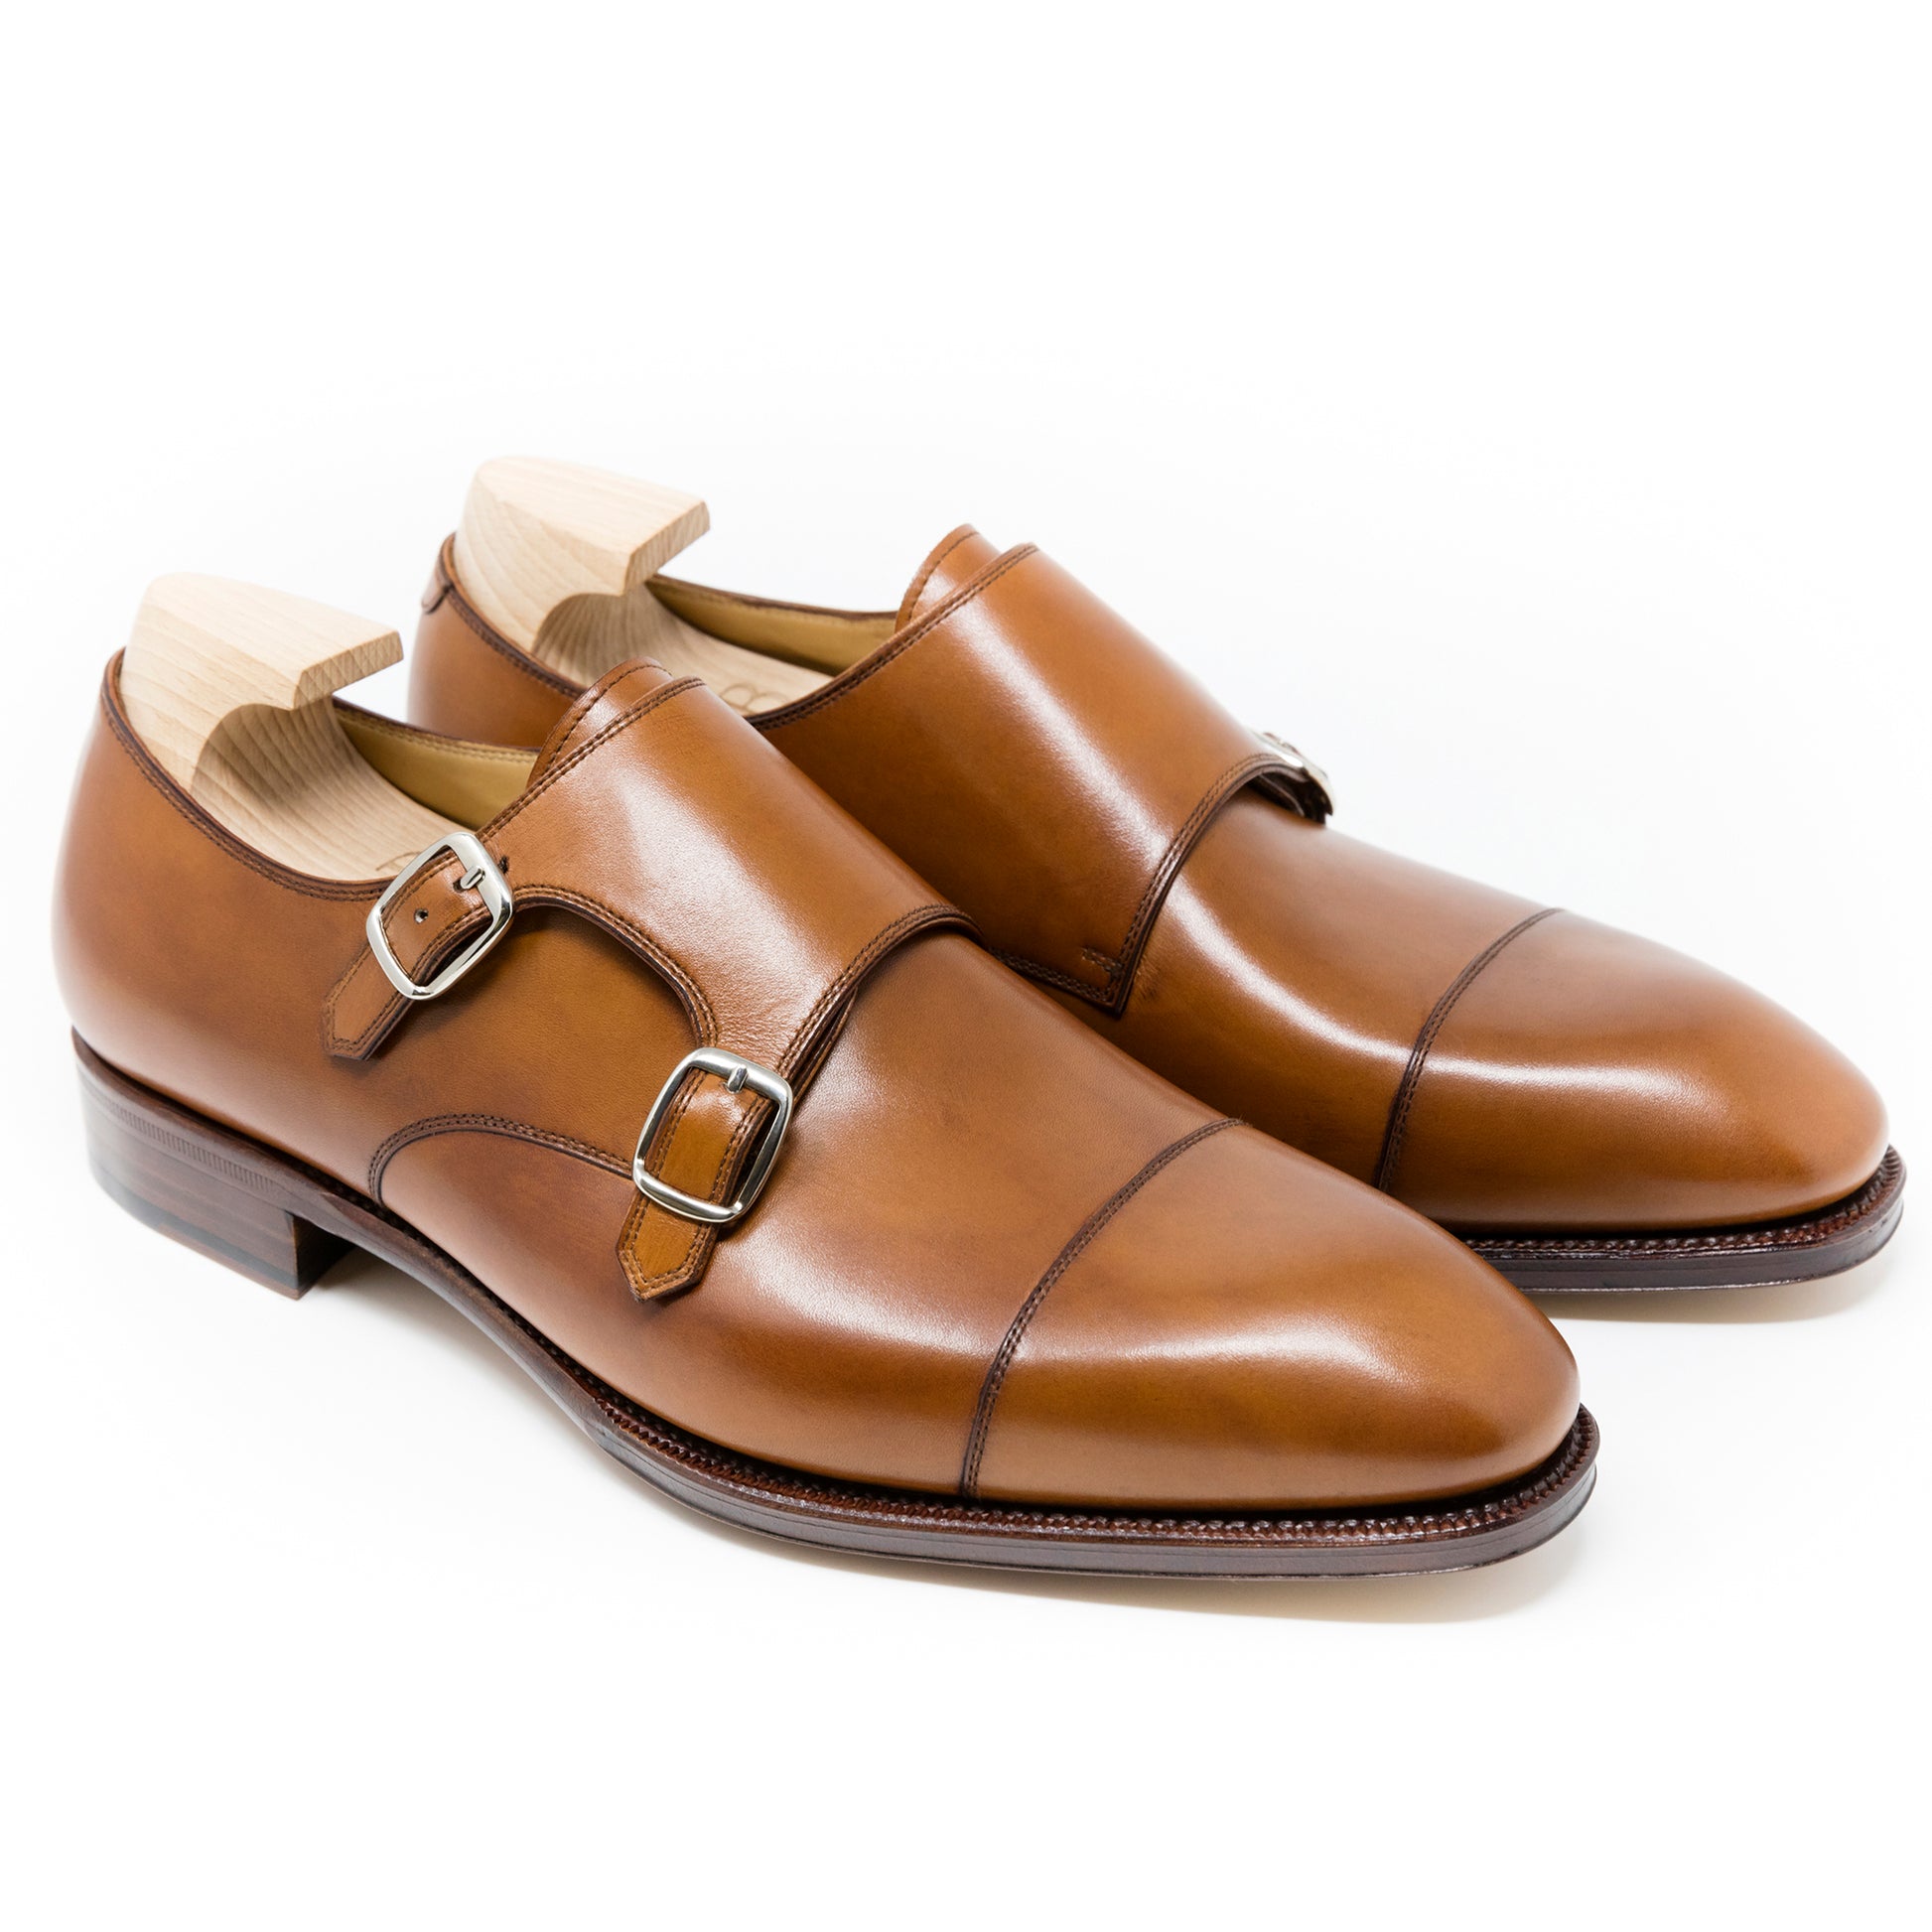 TLB Mallorca leather shoes 506 / ALAN / VEGANO CUERO